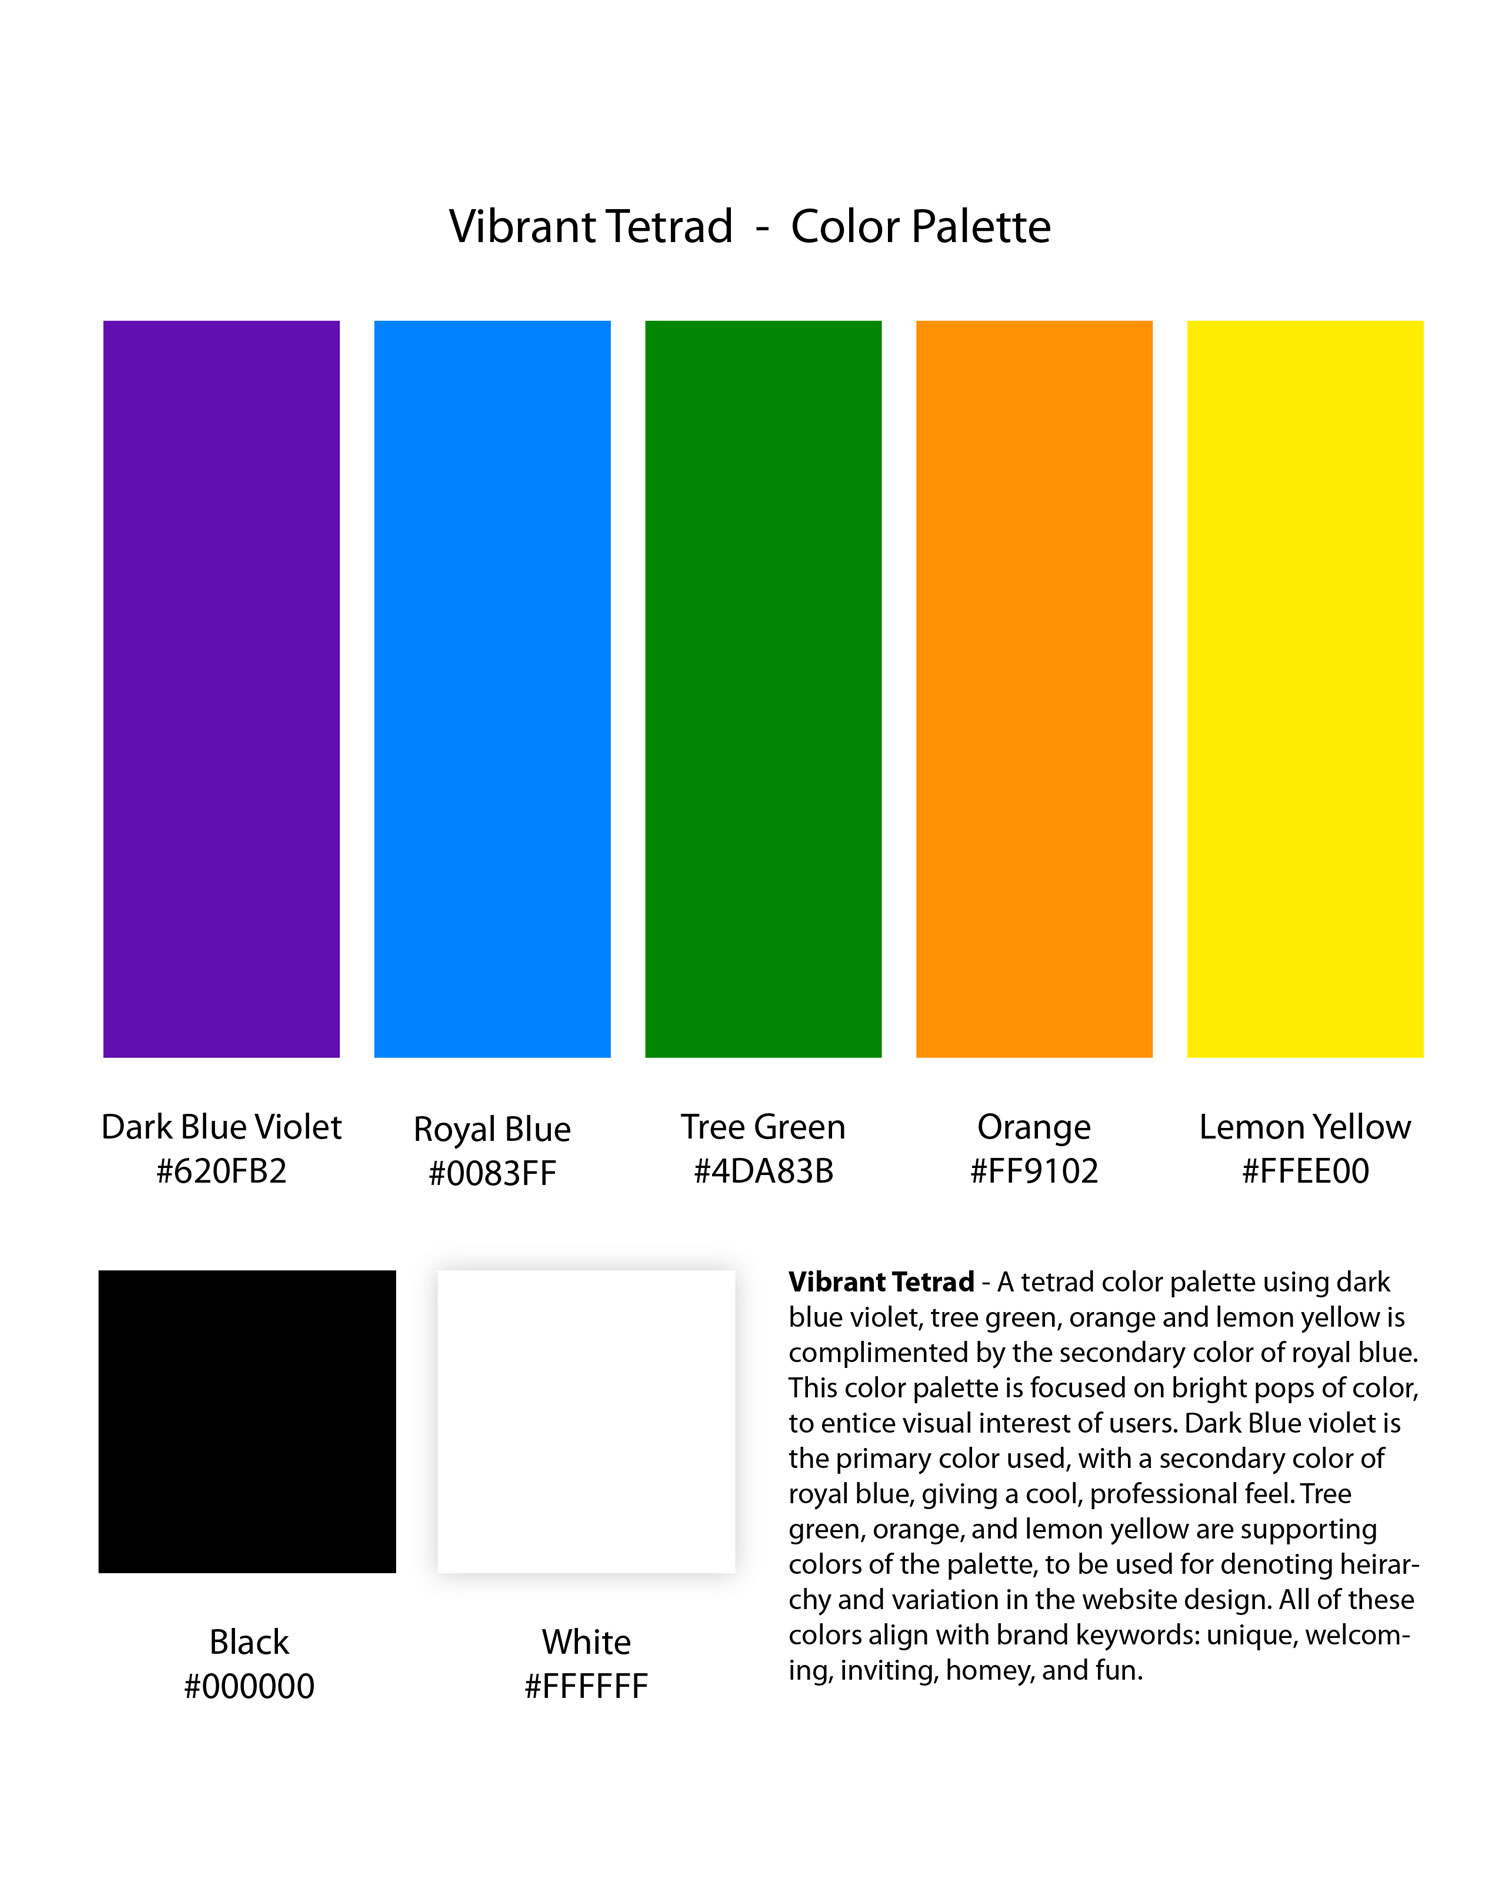 Cub Creek Science Camp - Web Design Color Palette Portfolio Image - Designs by Martin Holloway